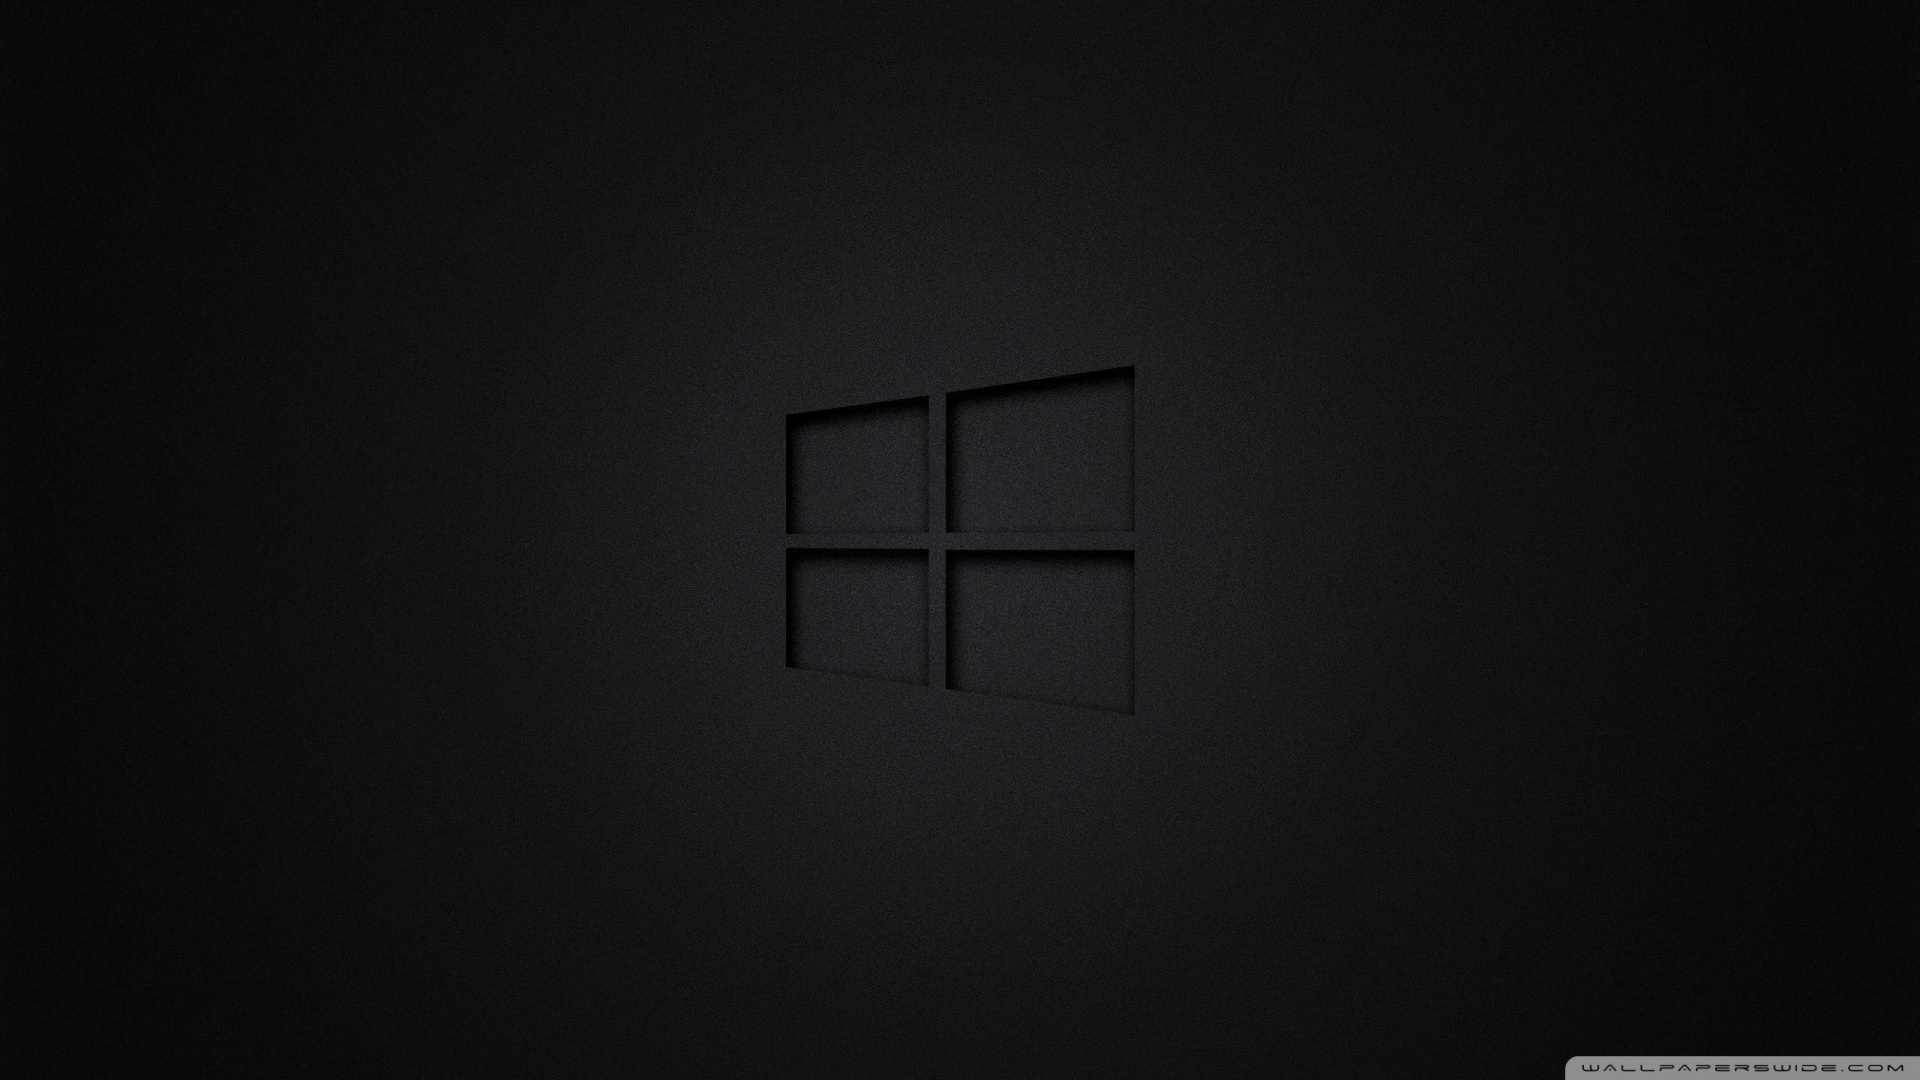  Windows  10  Wallpaper Black  Supportive Guru